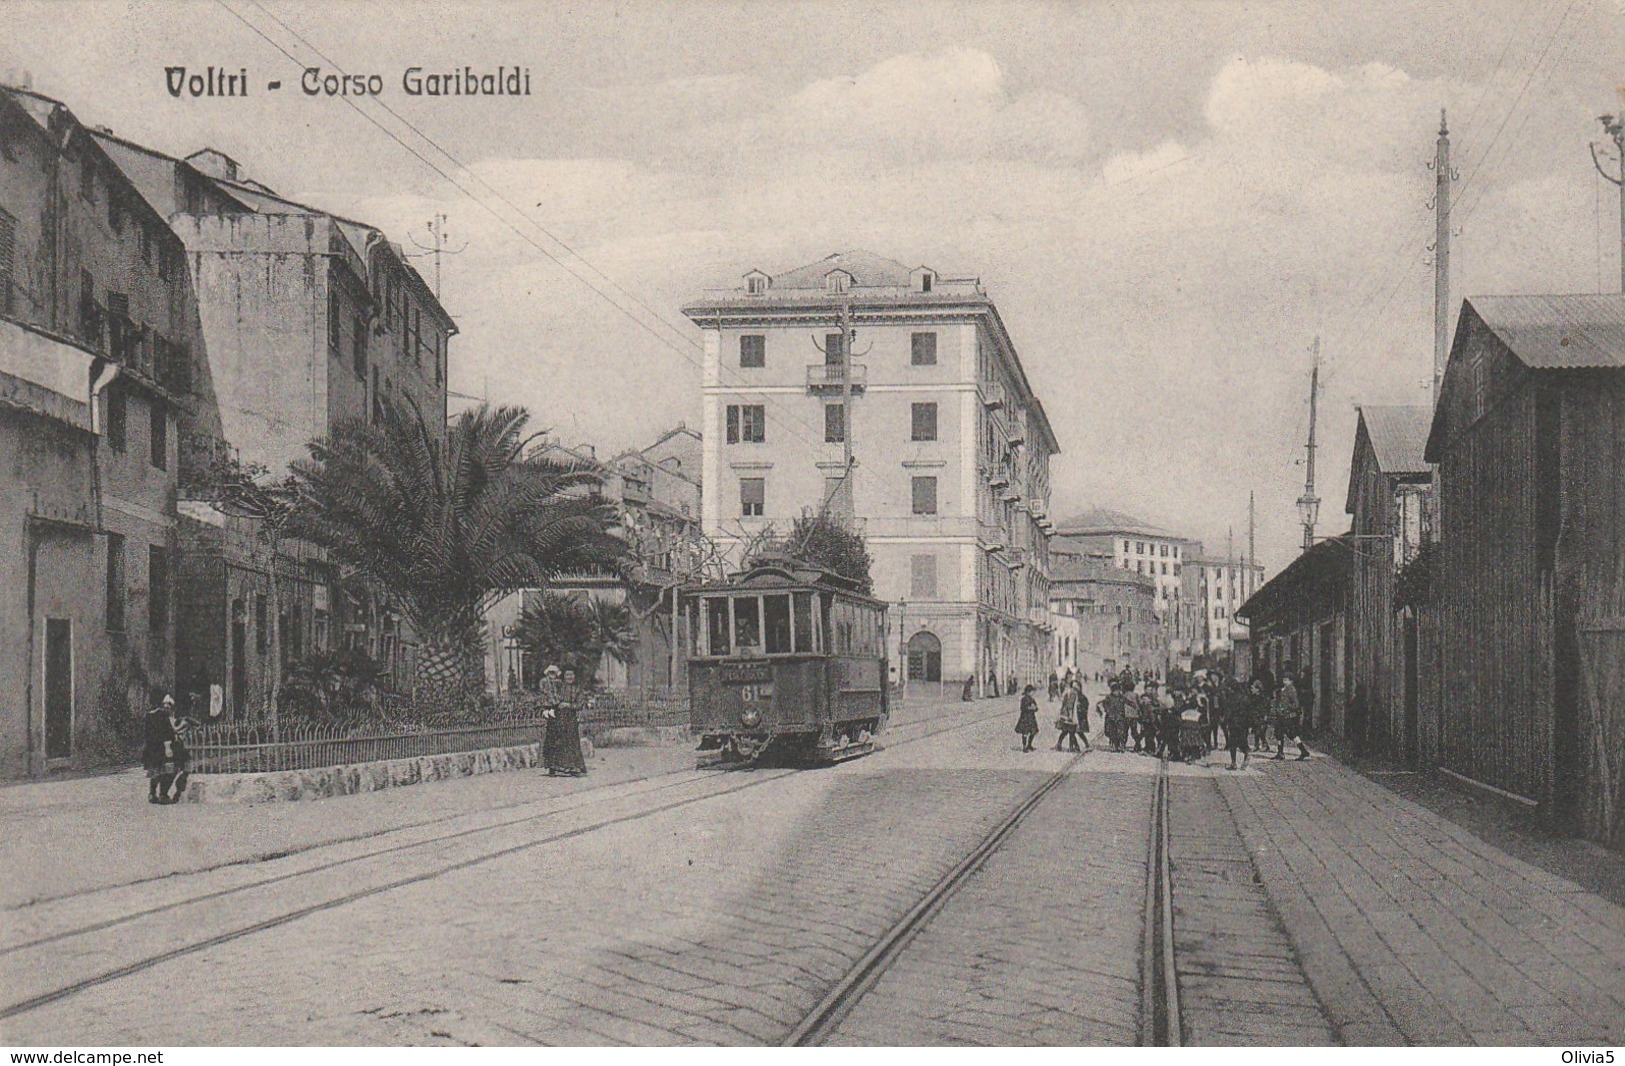 VOLTRI - CORSO GARIBALDI - Genova